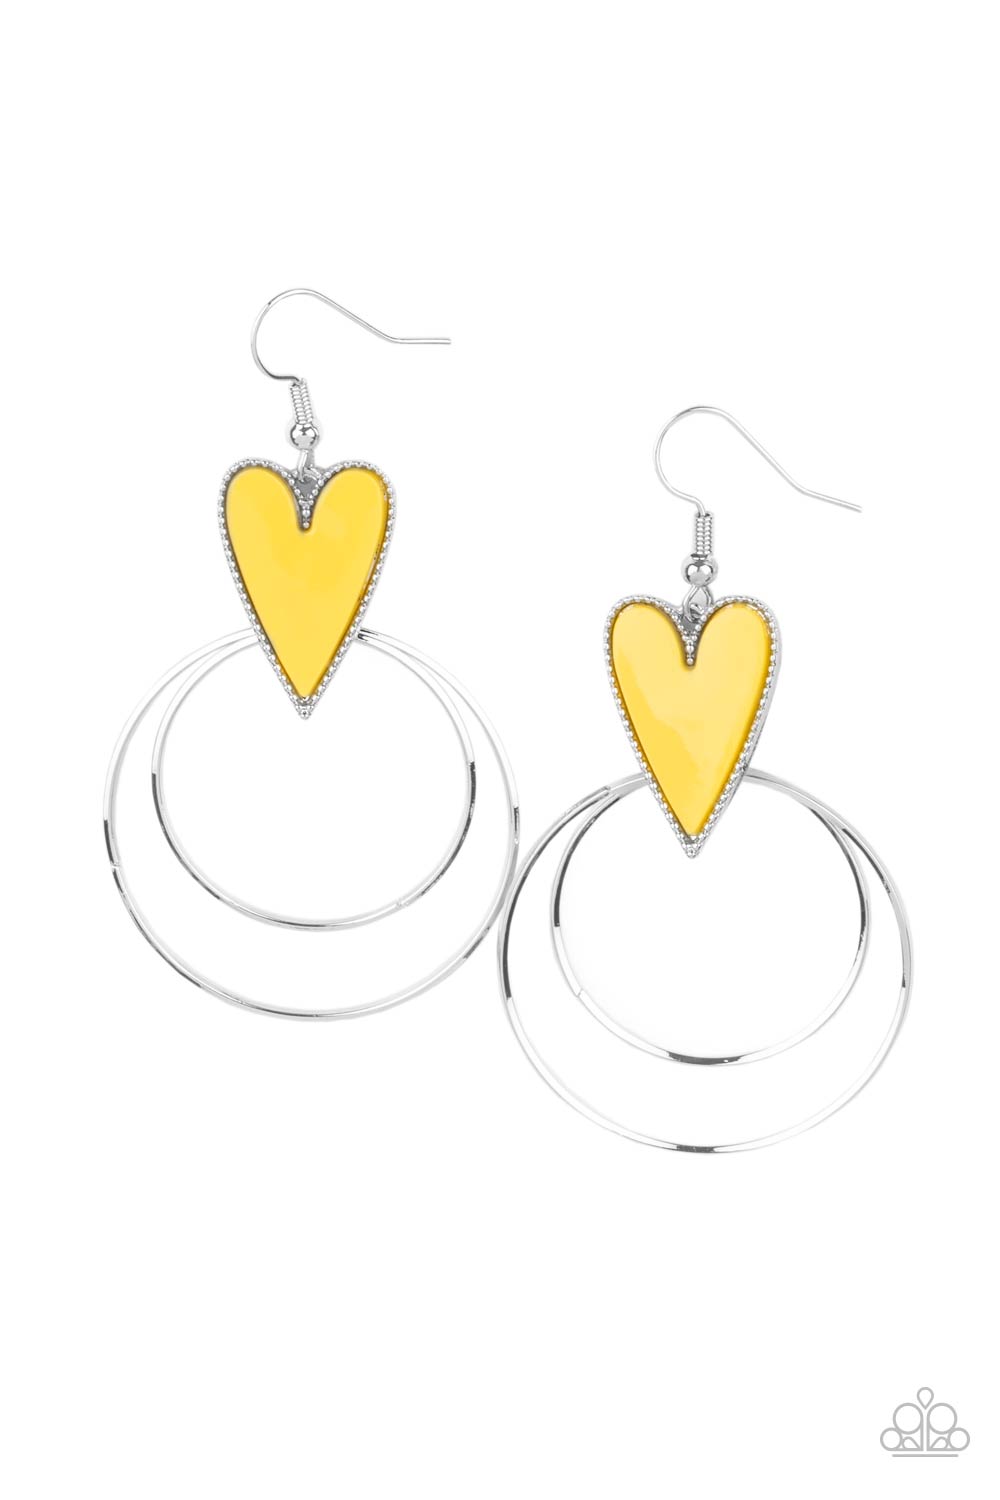 Paparazzi Earrings - Happily Ever Hearts - Yellow